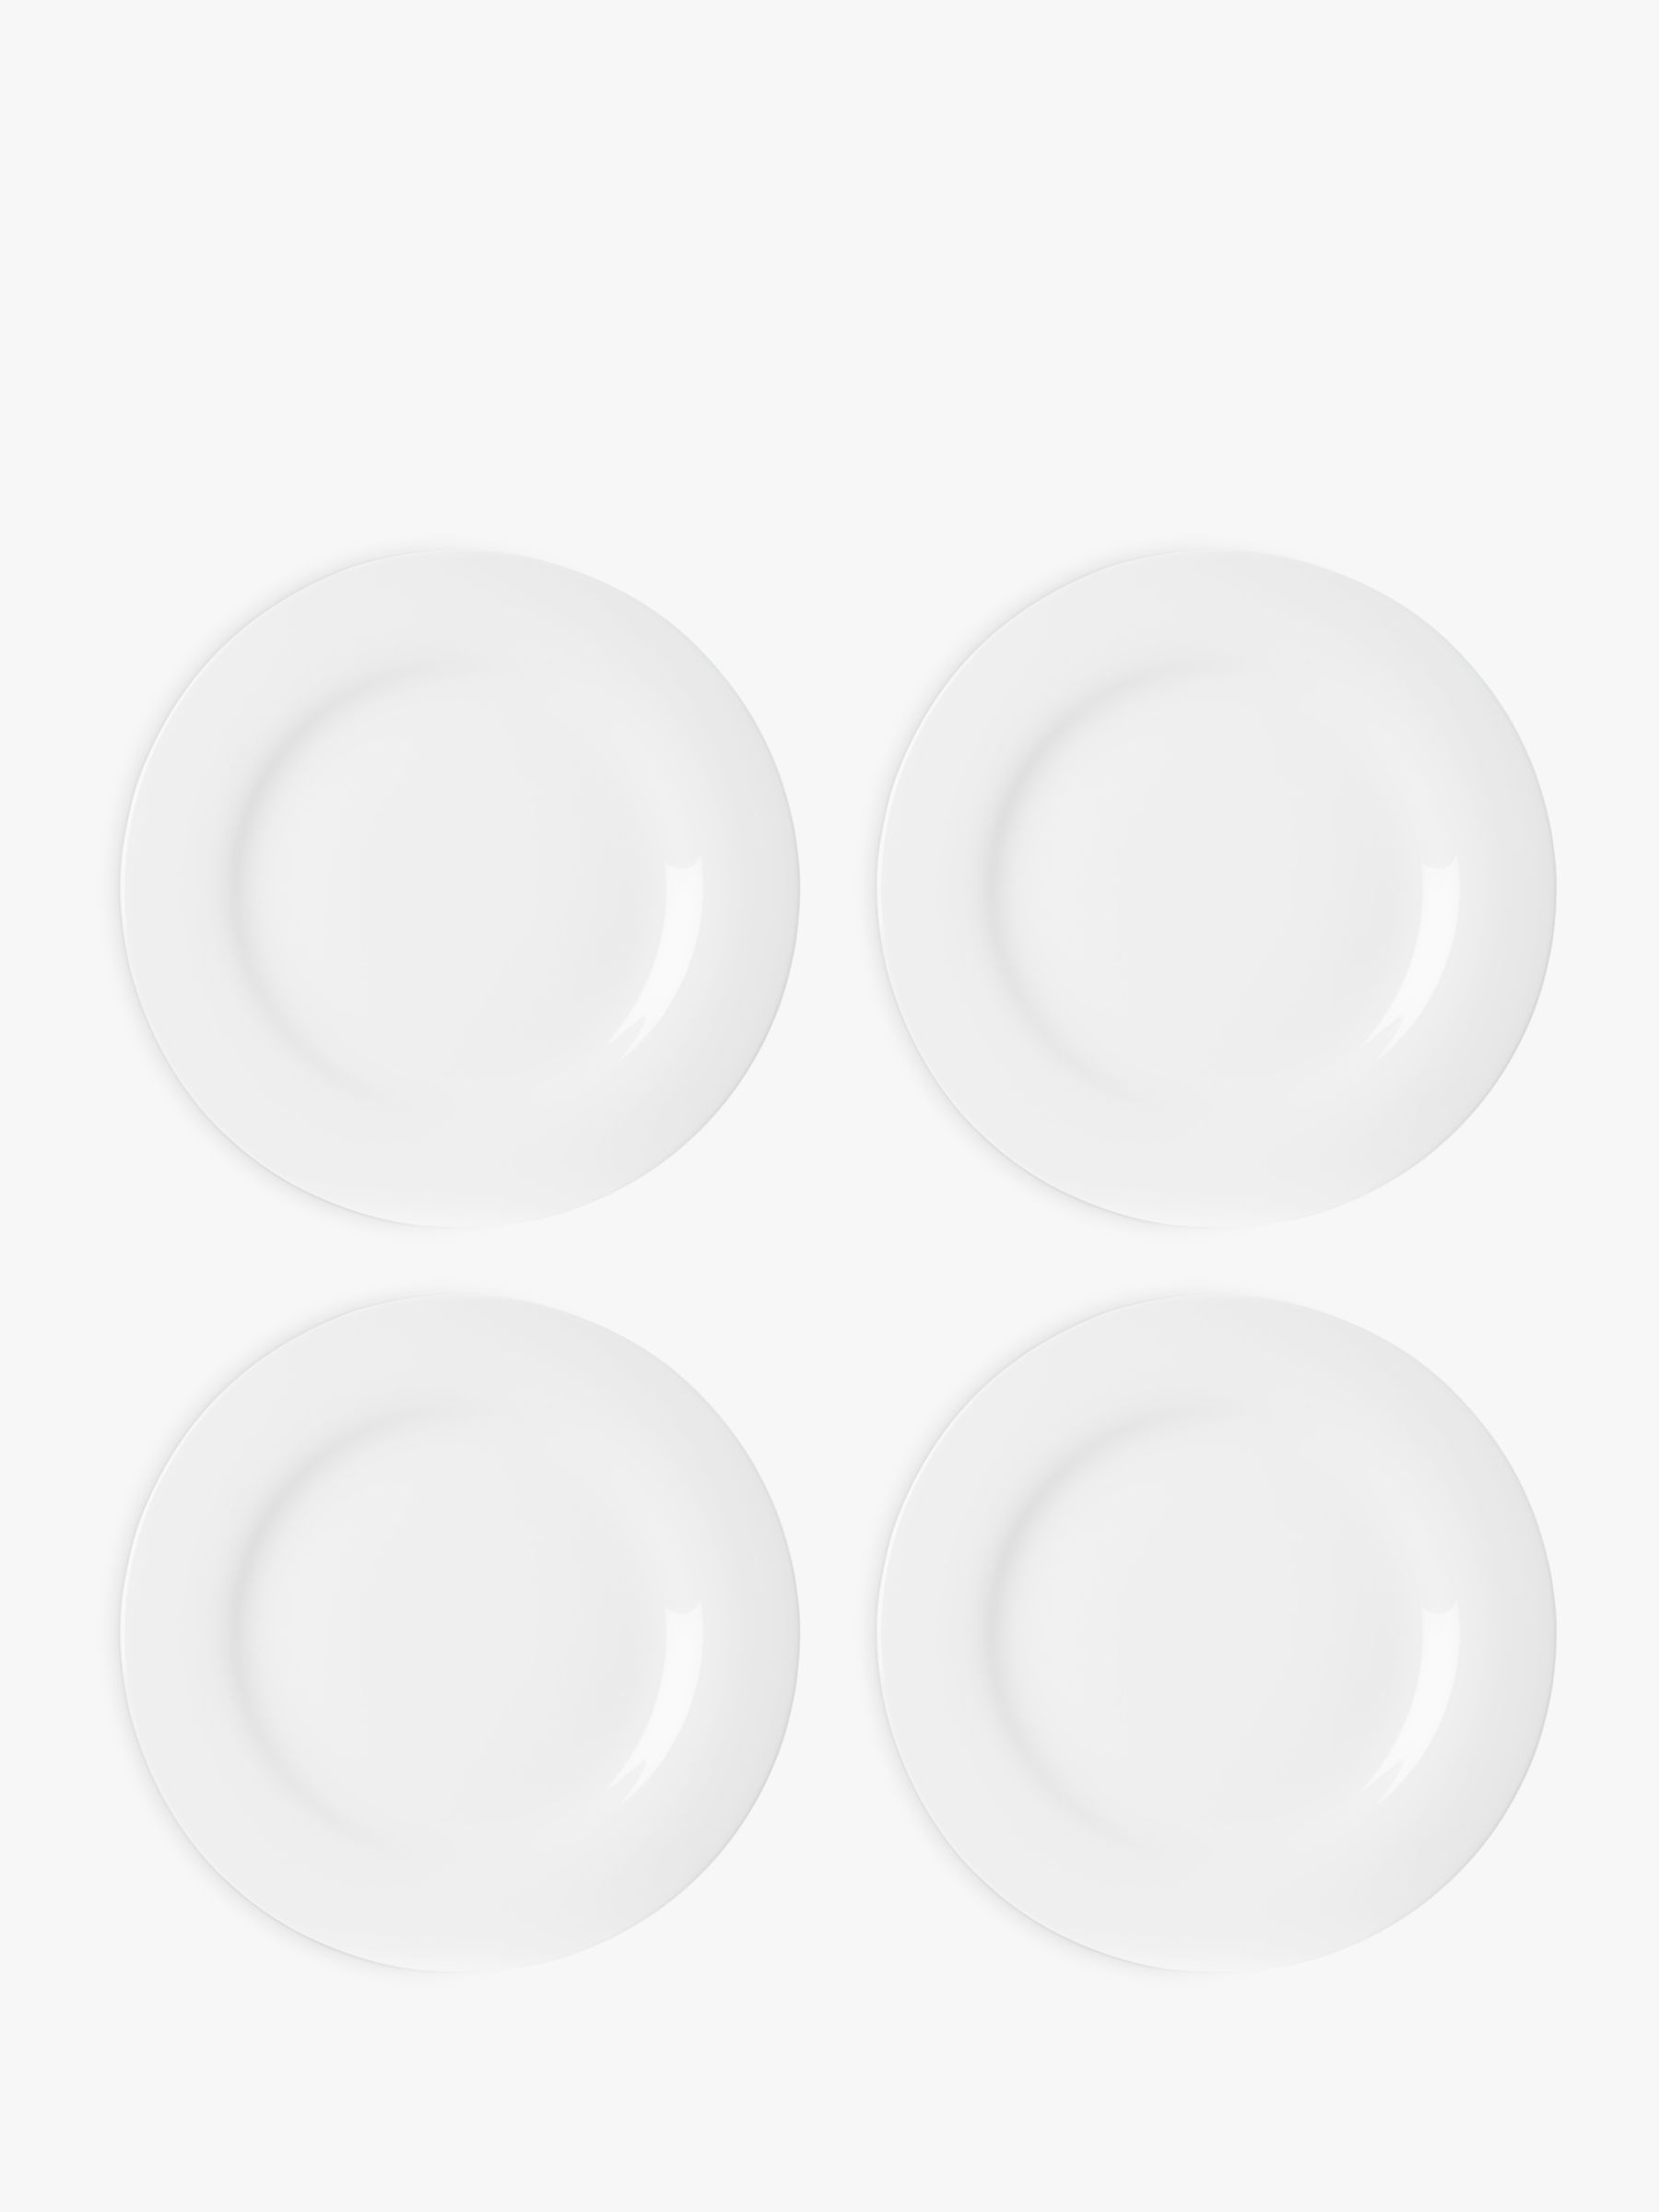 John Lewis ANYDAY Dine Rim Side Plates, Set of 4, 22cm, White